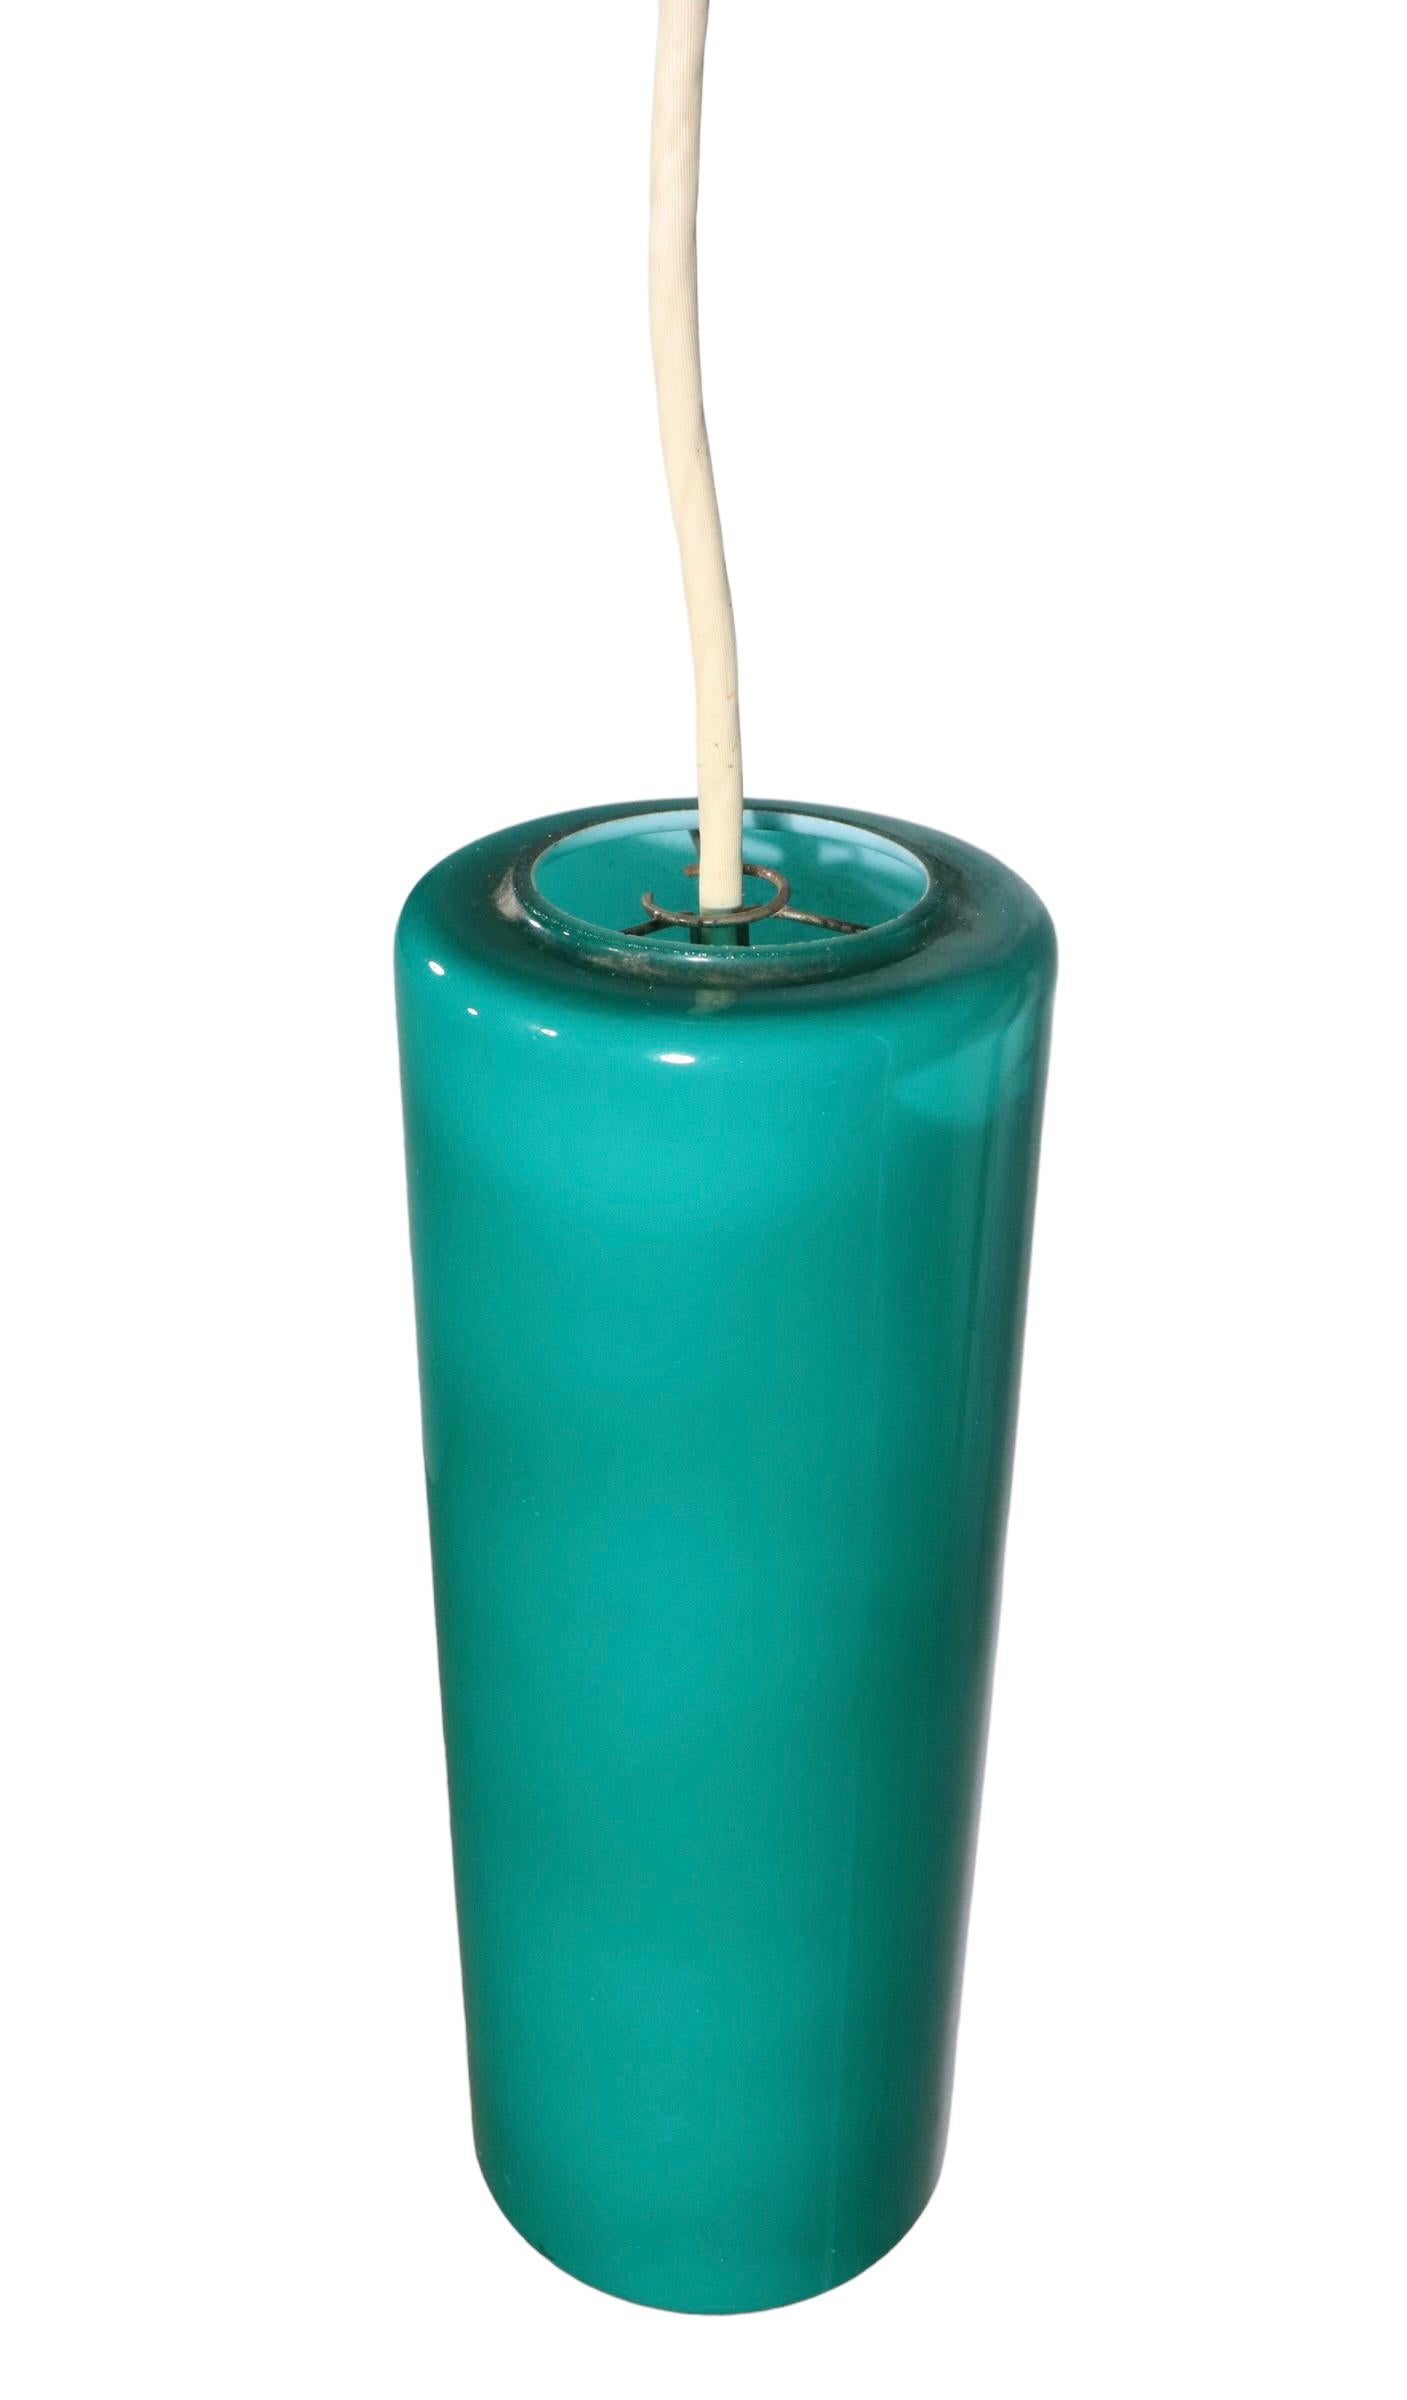 Prescolit-Zylinder-Kronleuchter aus grünem Glas, ca. 1950 - 1970er Jahre im Angebot 7